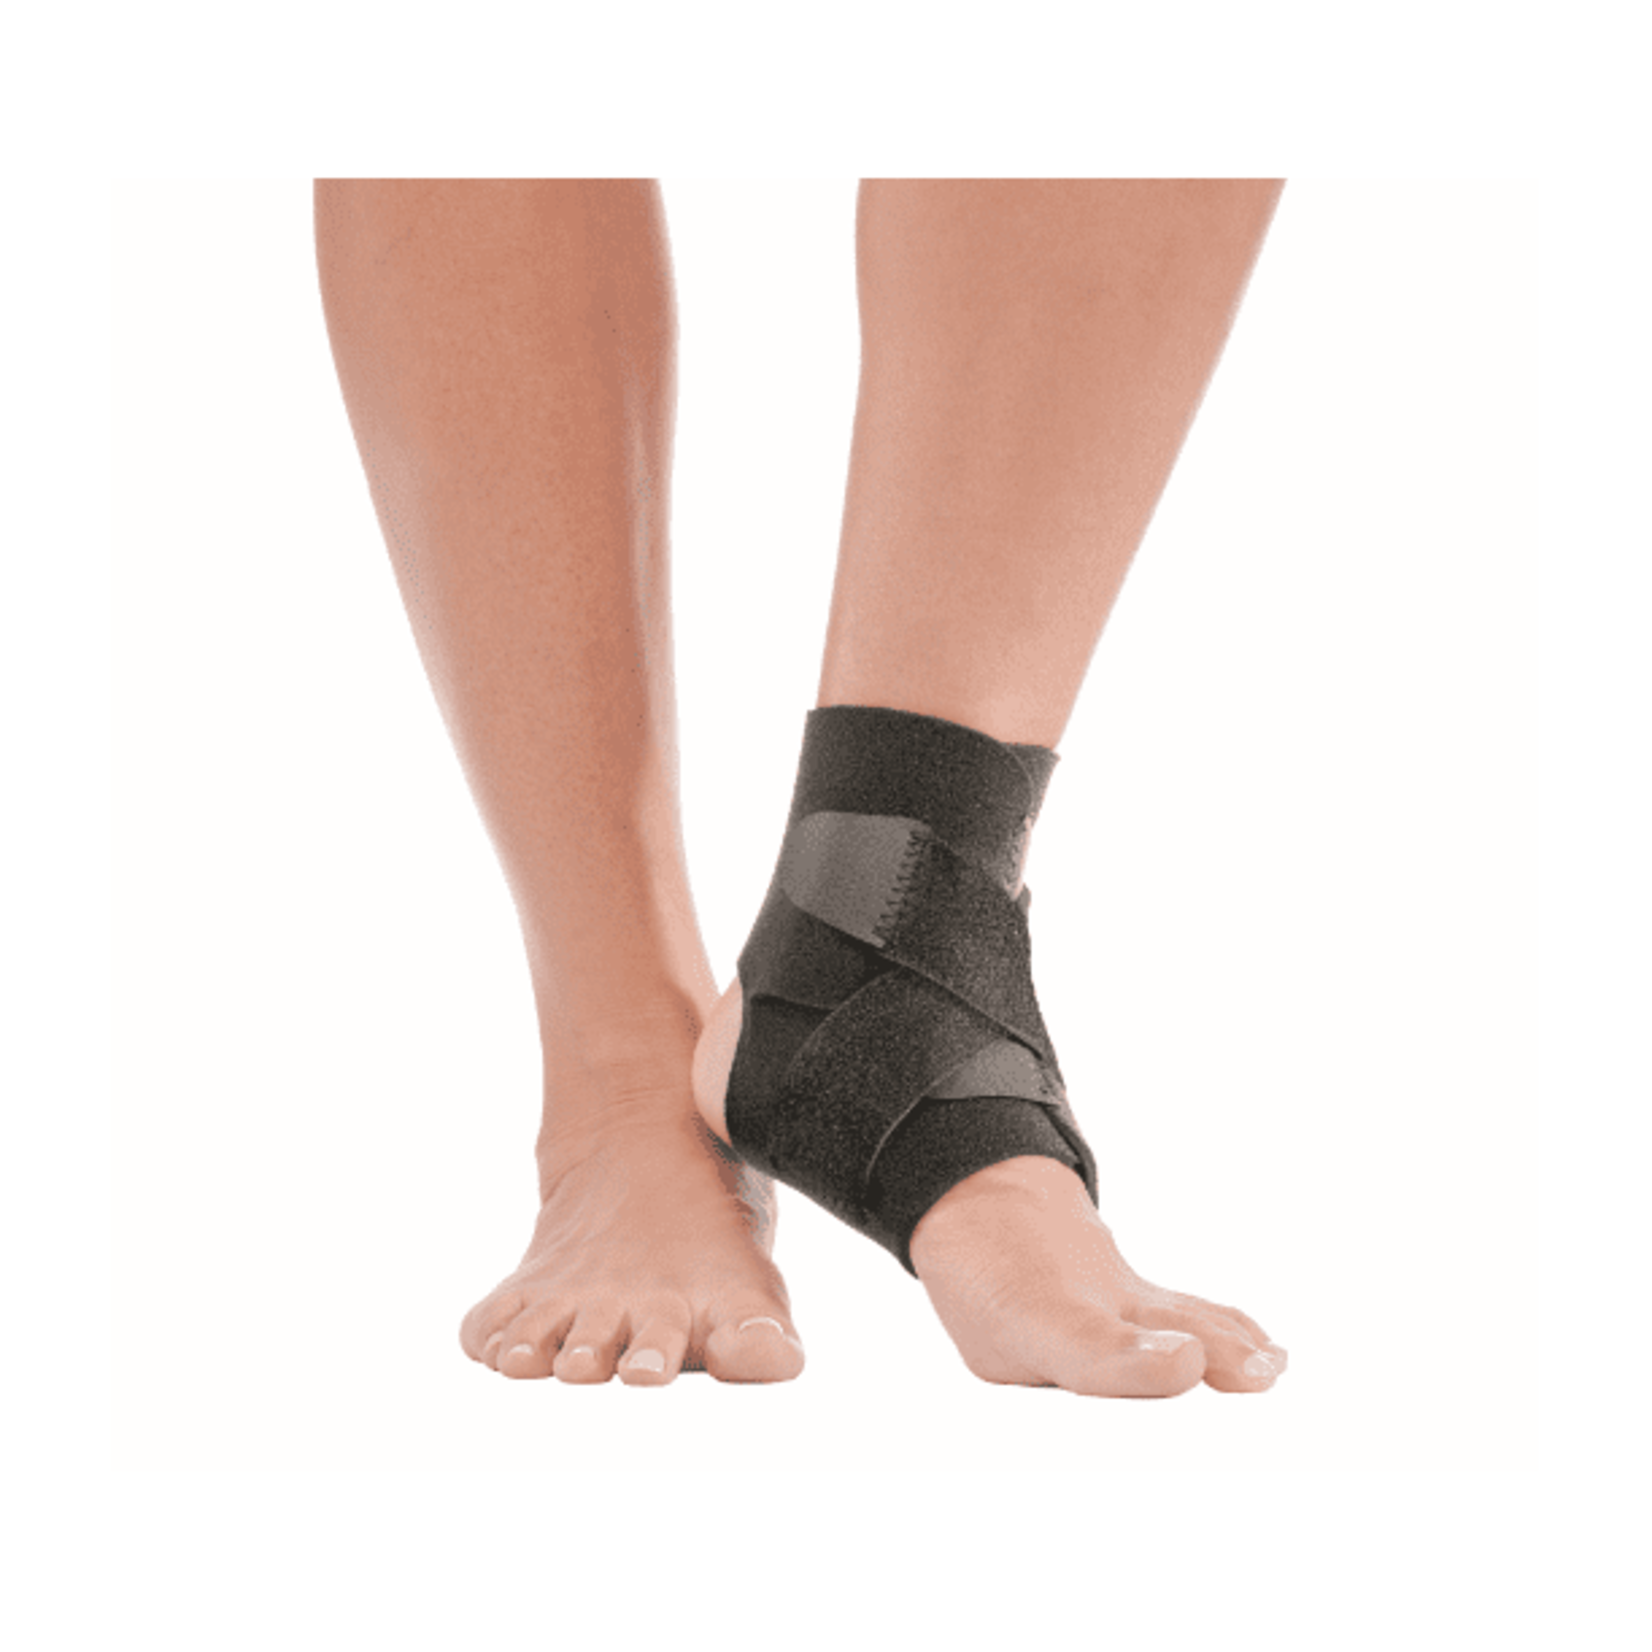 6511 - Muller - Adjustable Ankle Support - (Black) - (One Size) - NDC# 74676-6511-18